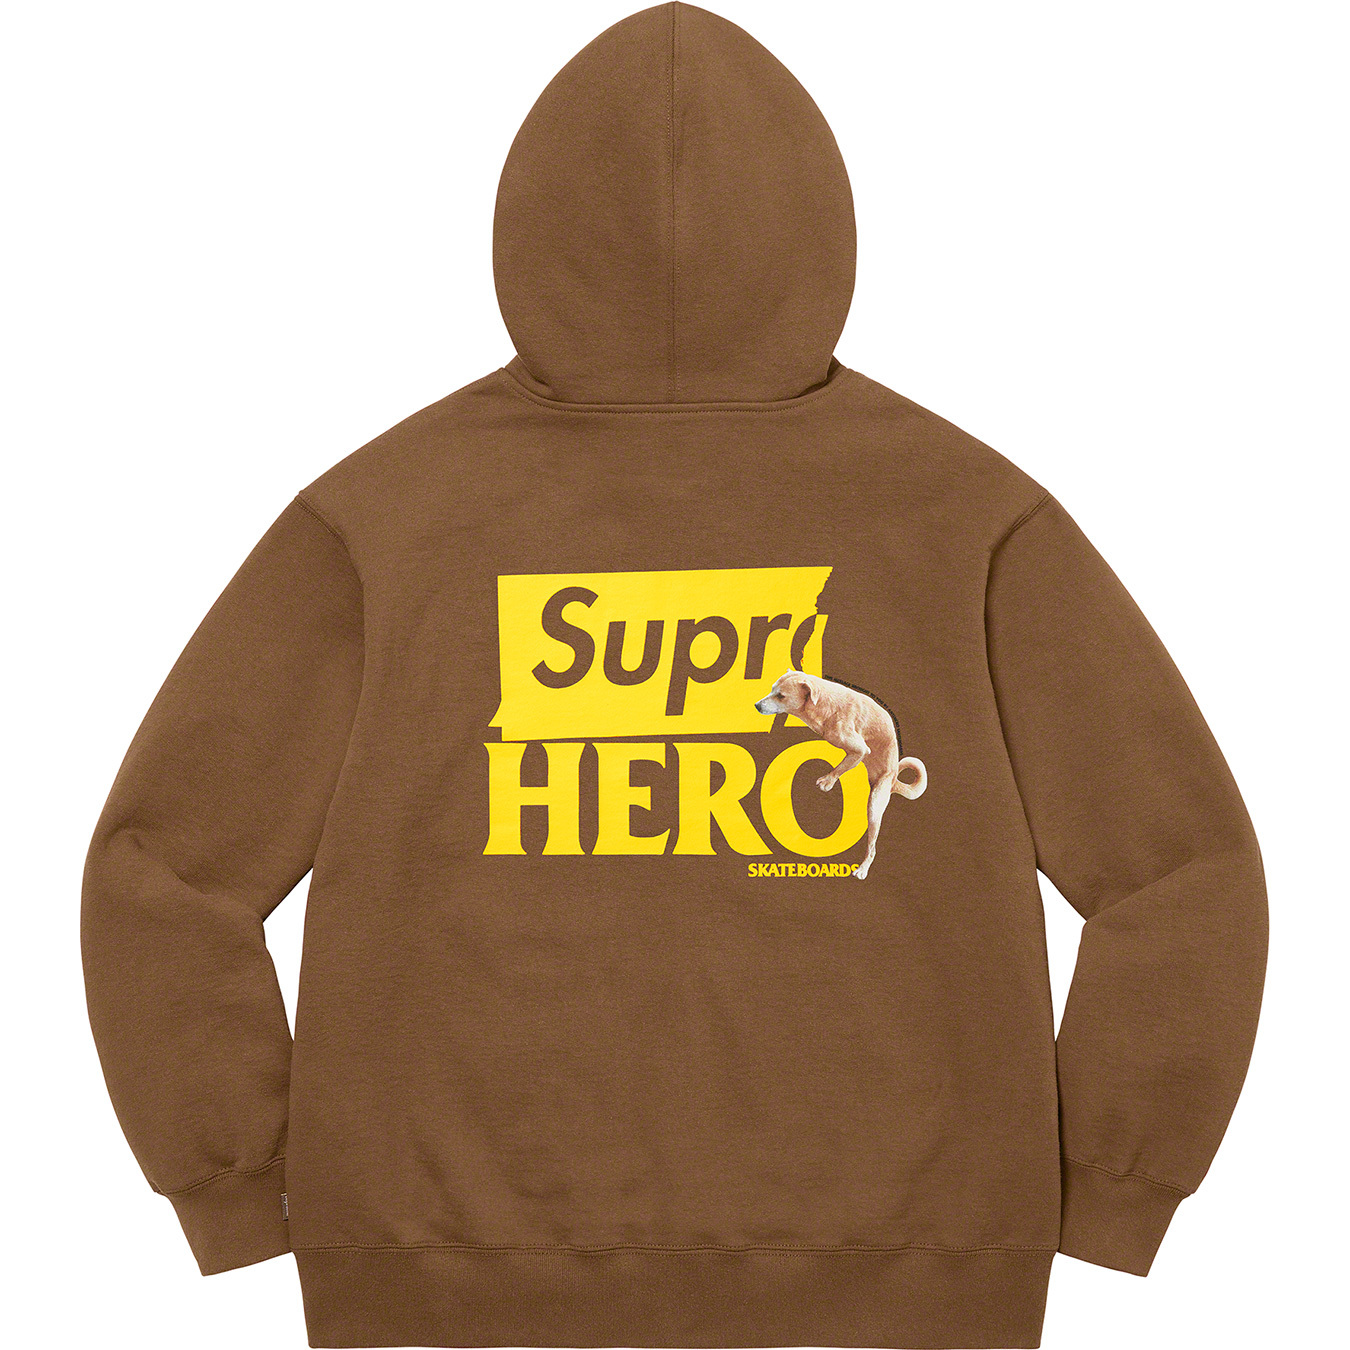 Supreme®/ANTIHERO® Hooded Sweatshirt